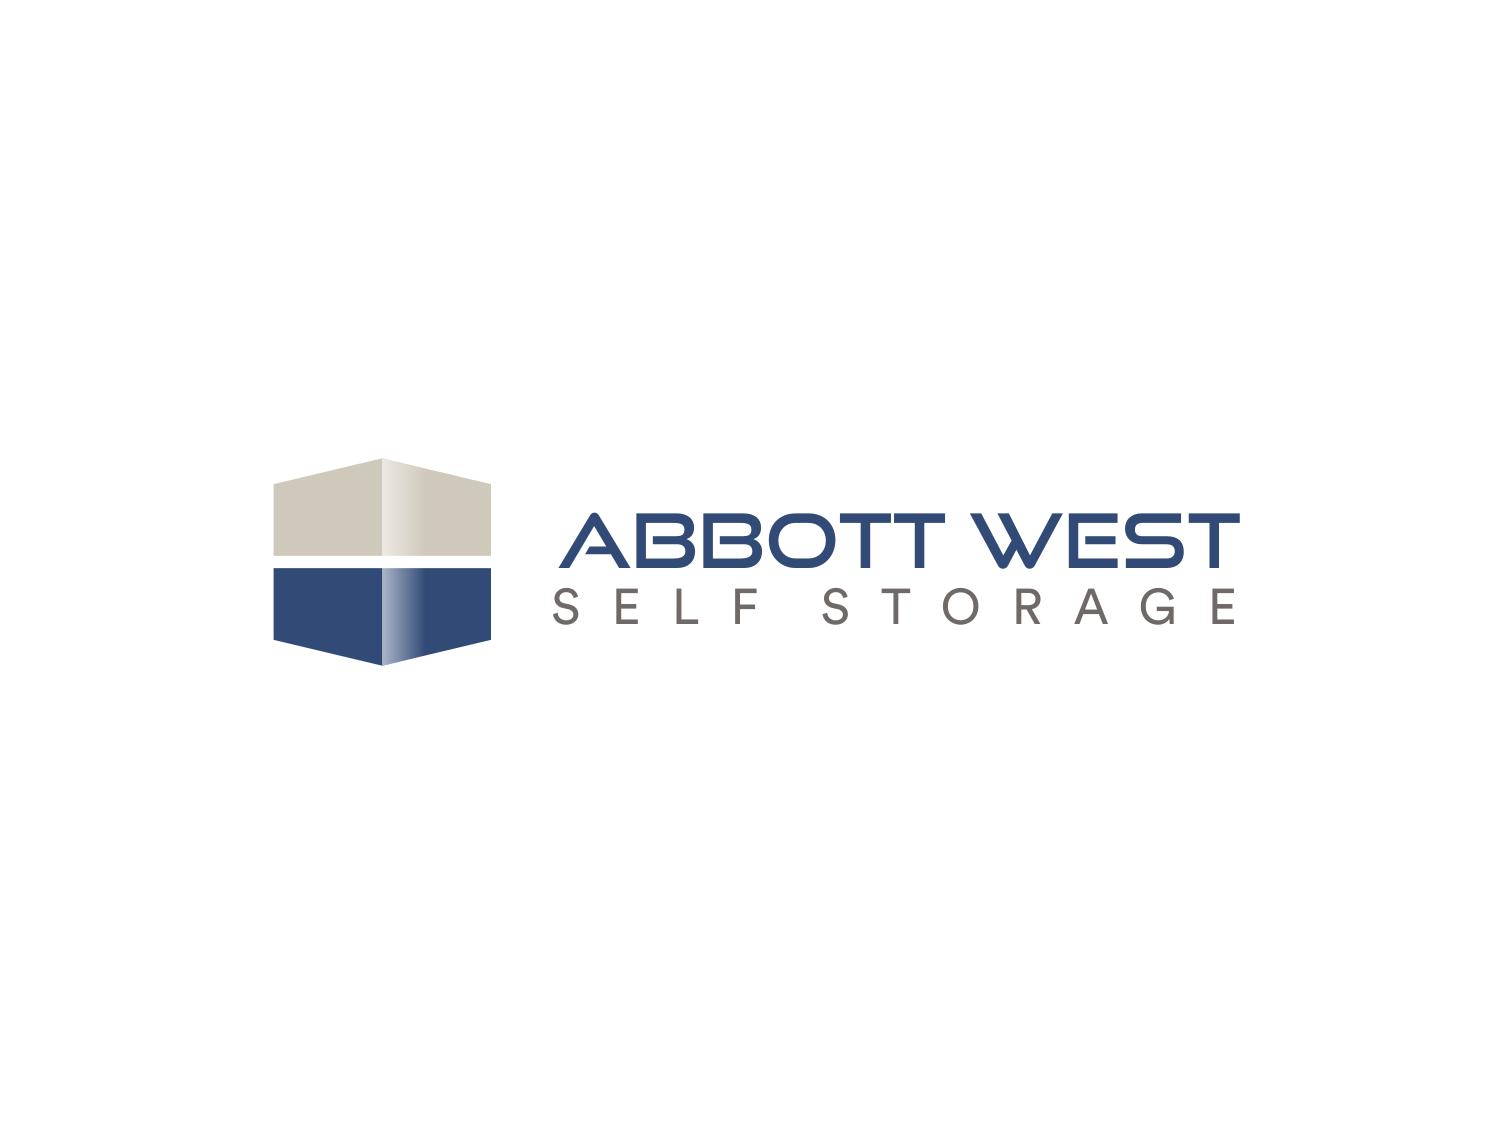 Abbott Logo - Elegant, Playful, Self Storage Logo Design for Abbott West Self